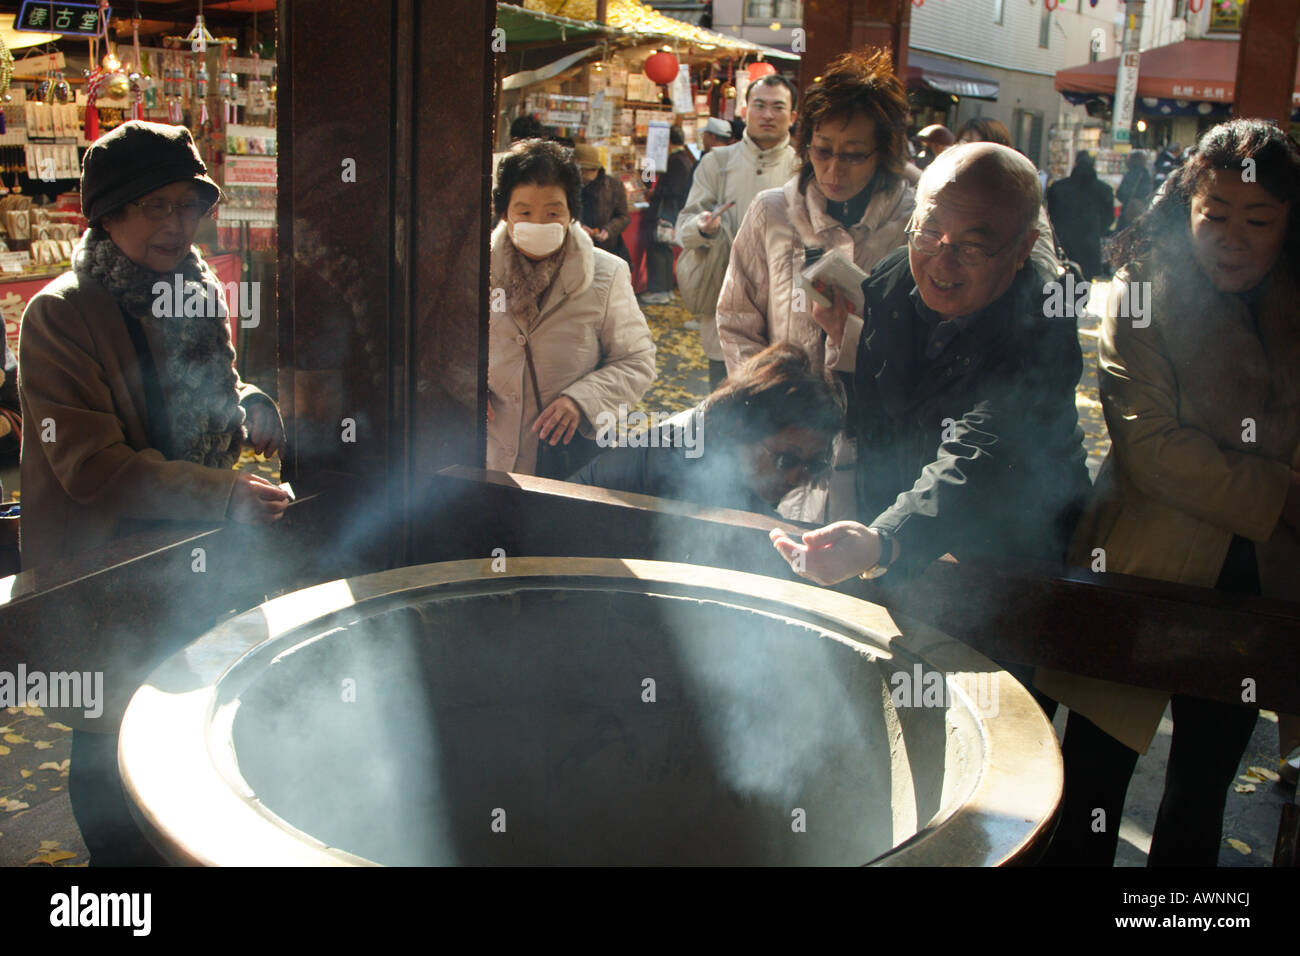 Senior citizens at an Incense burner known as a kouro at Toganji Temple Sugamo, Tokyo, Japan, Stock Photo